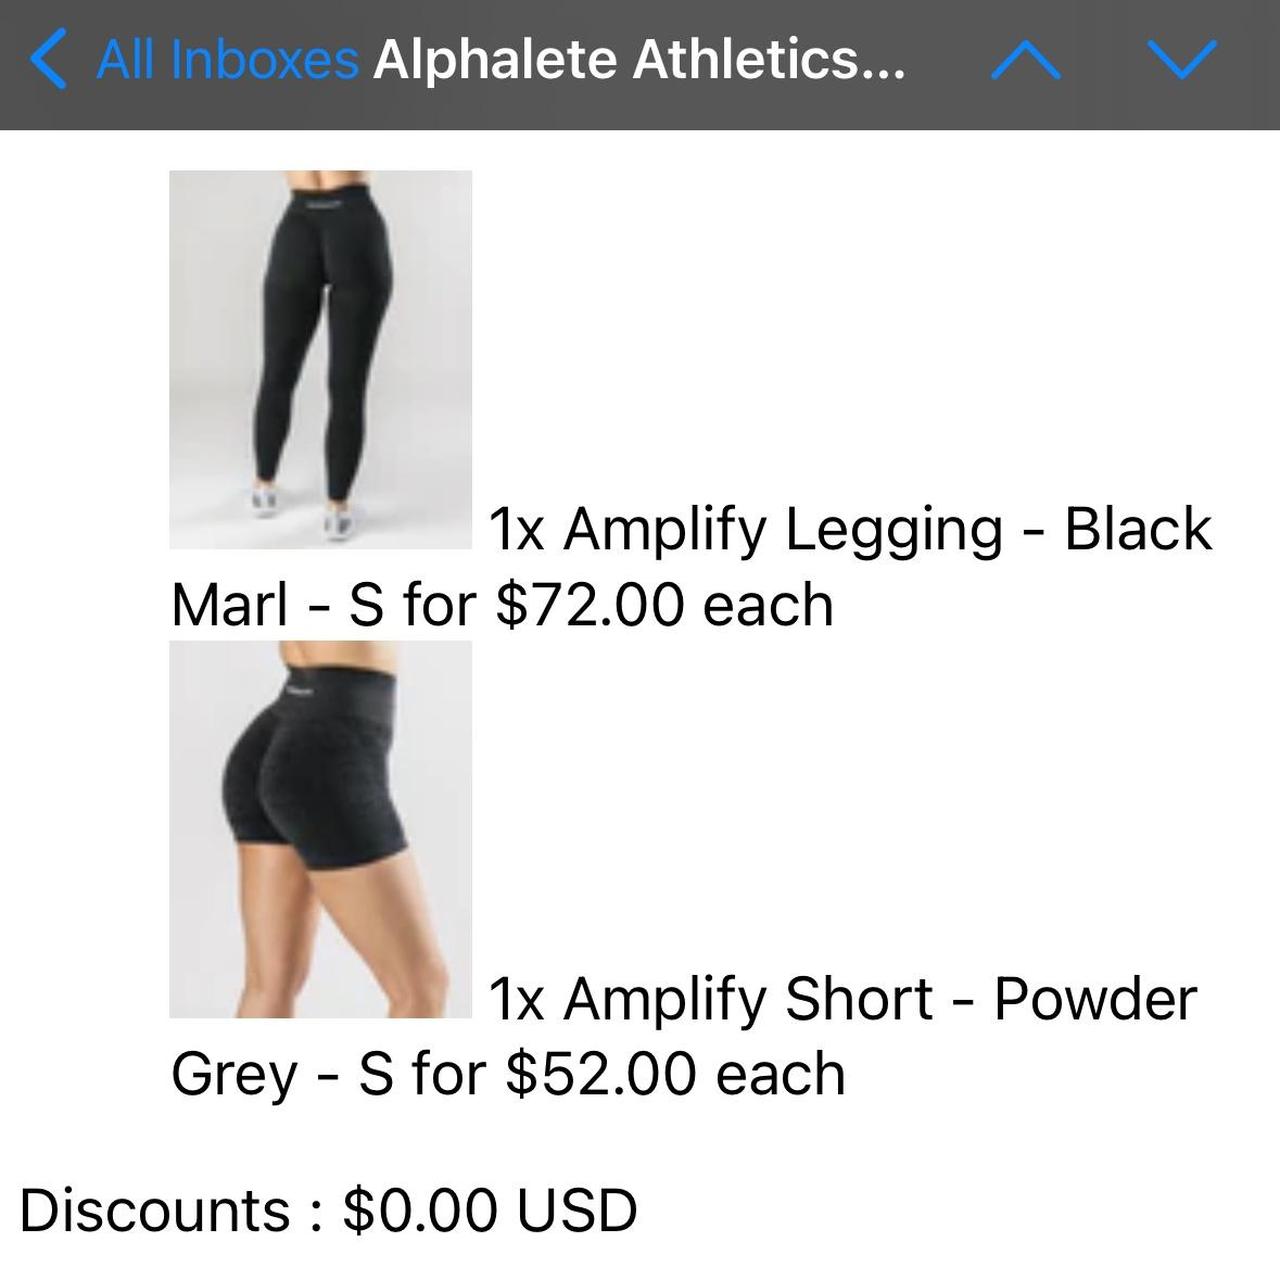 AMPLIFY LEGGING - BLACK